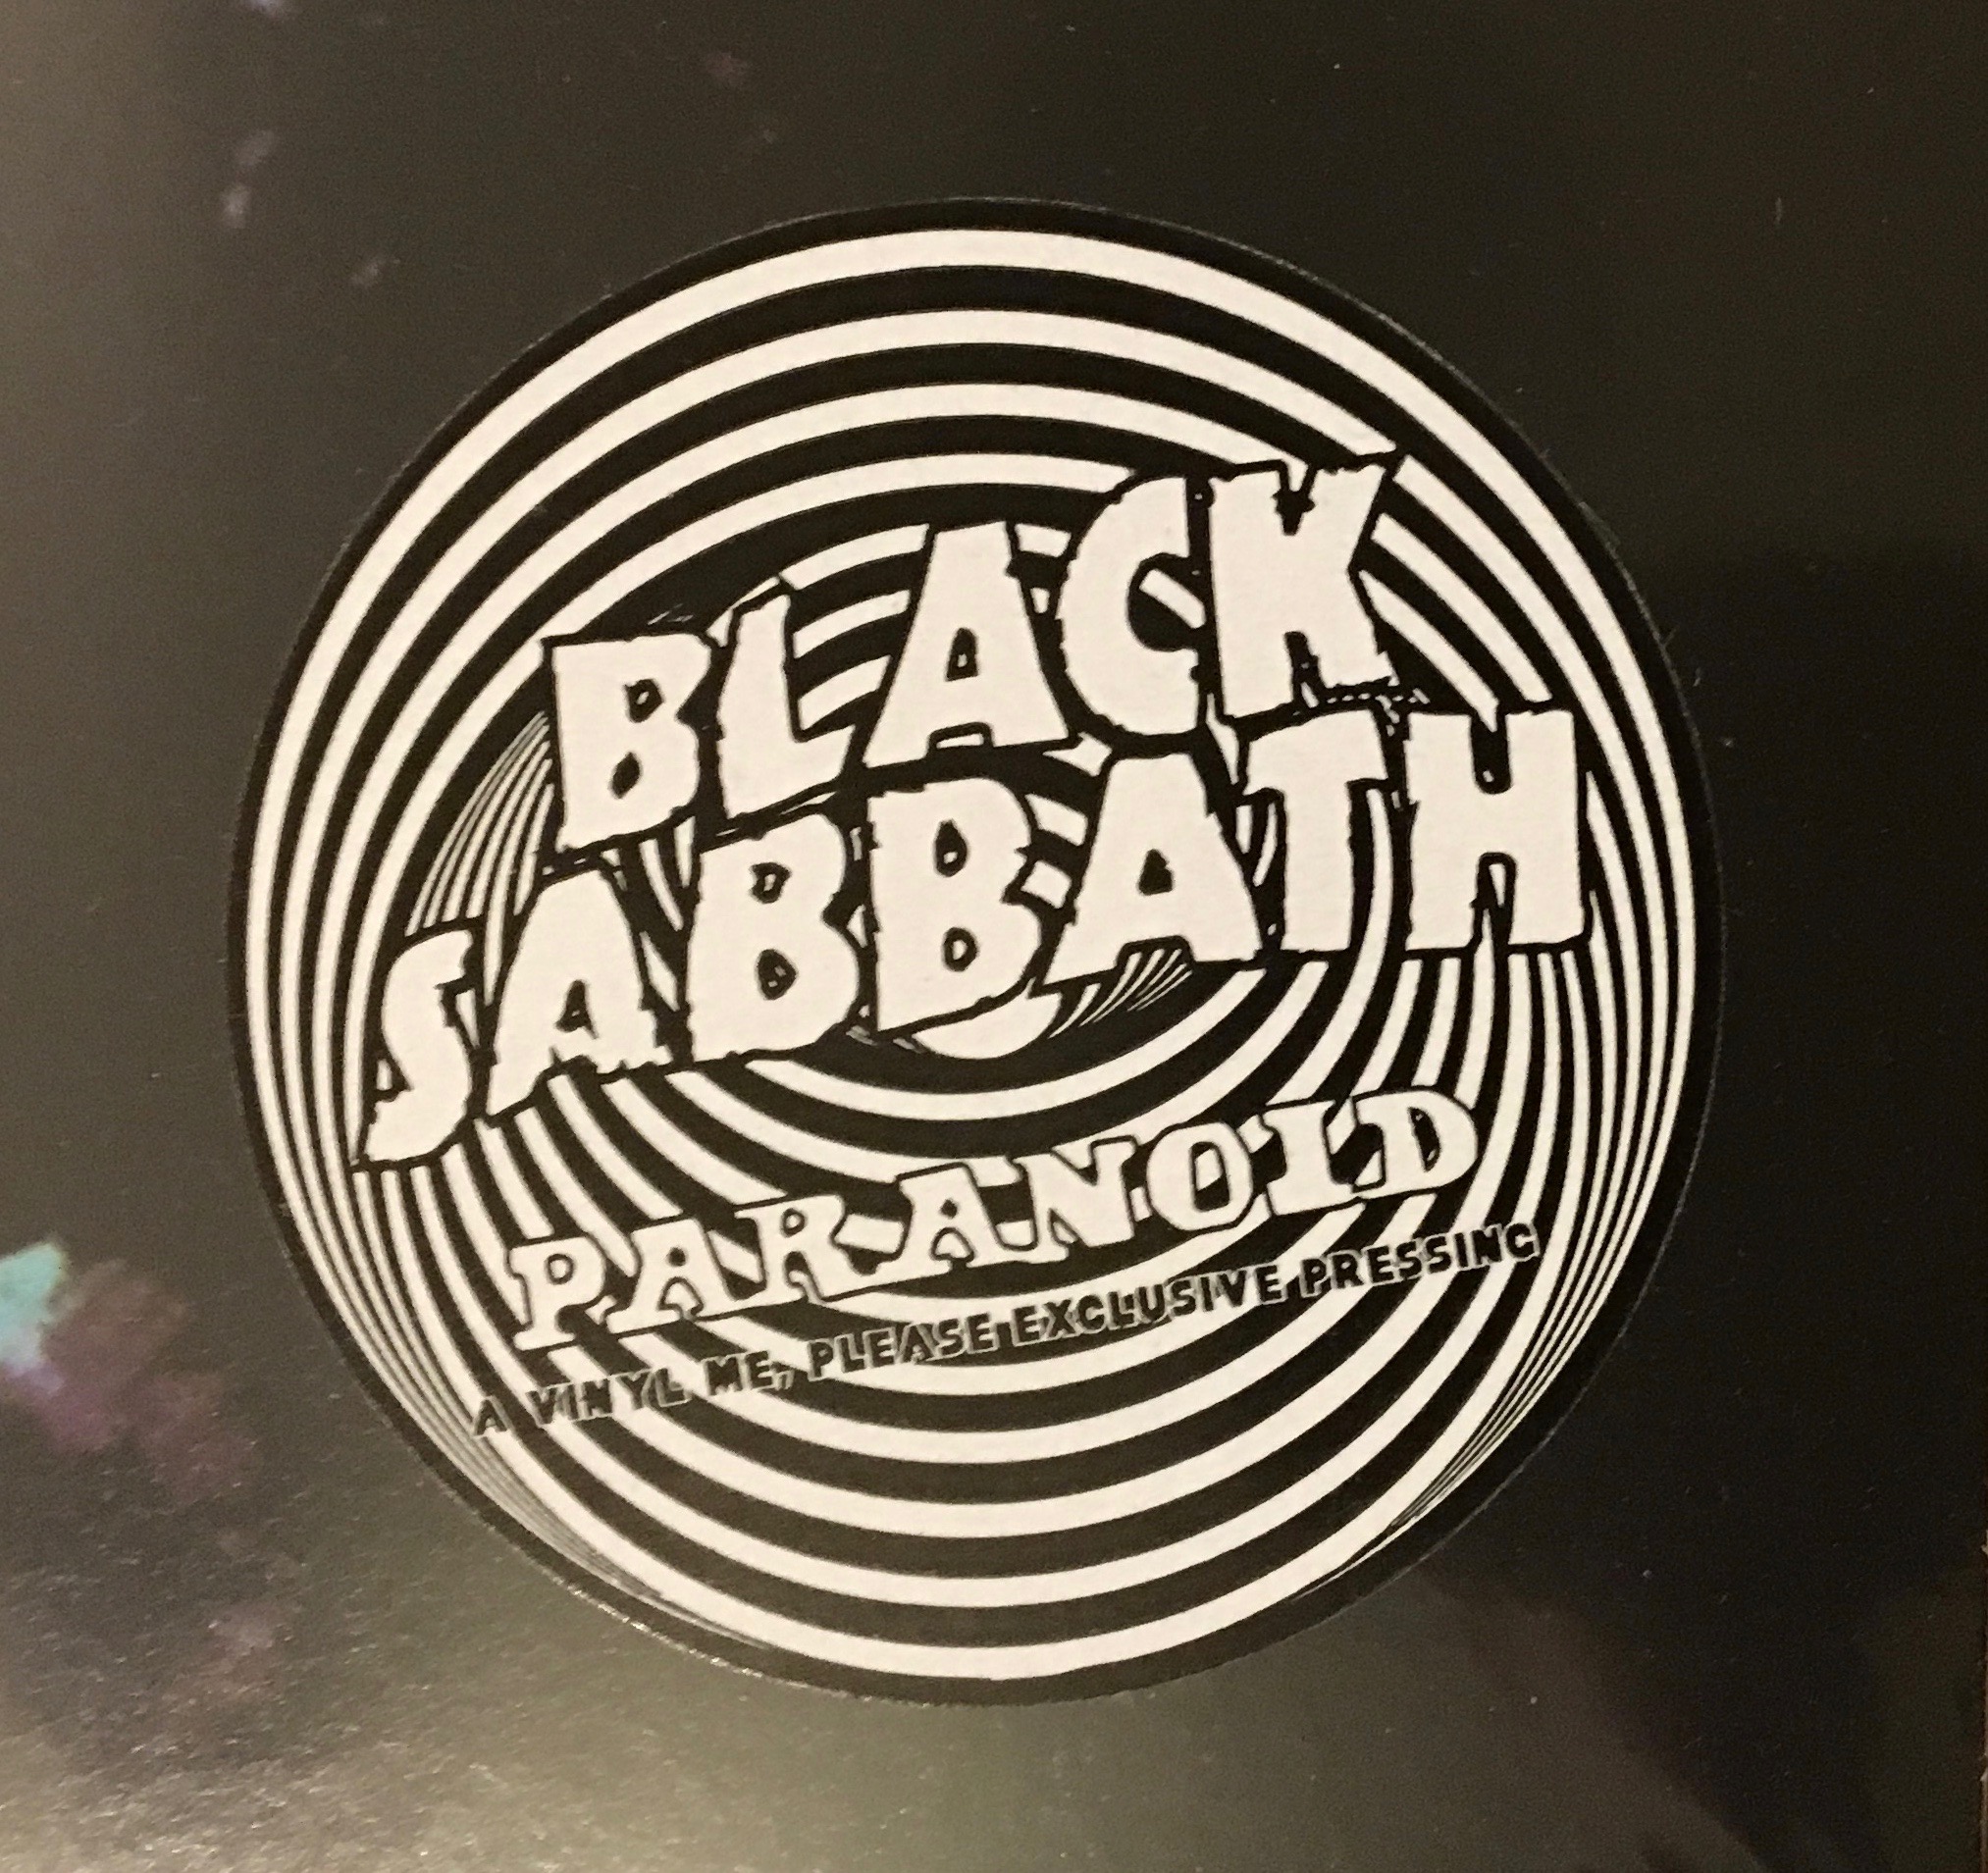 Vinyl me, please, exclusive pressing, black sabbath, paranoid